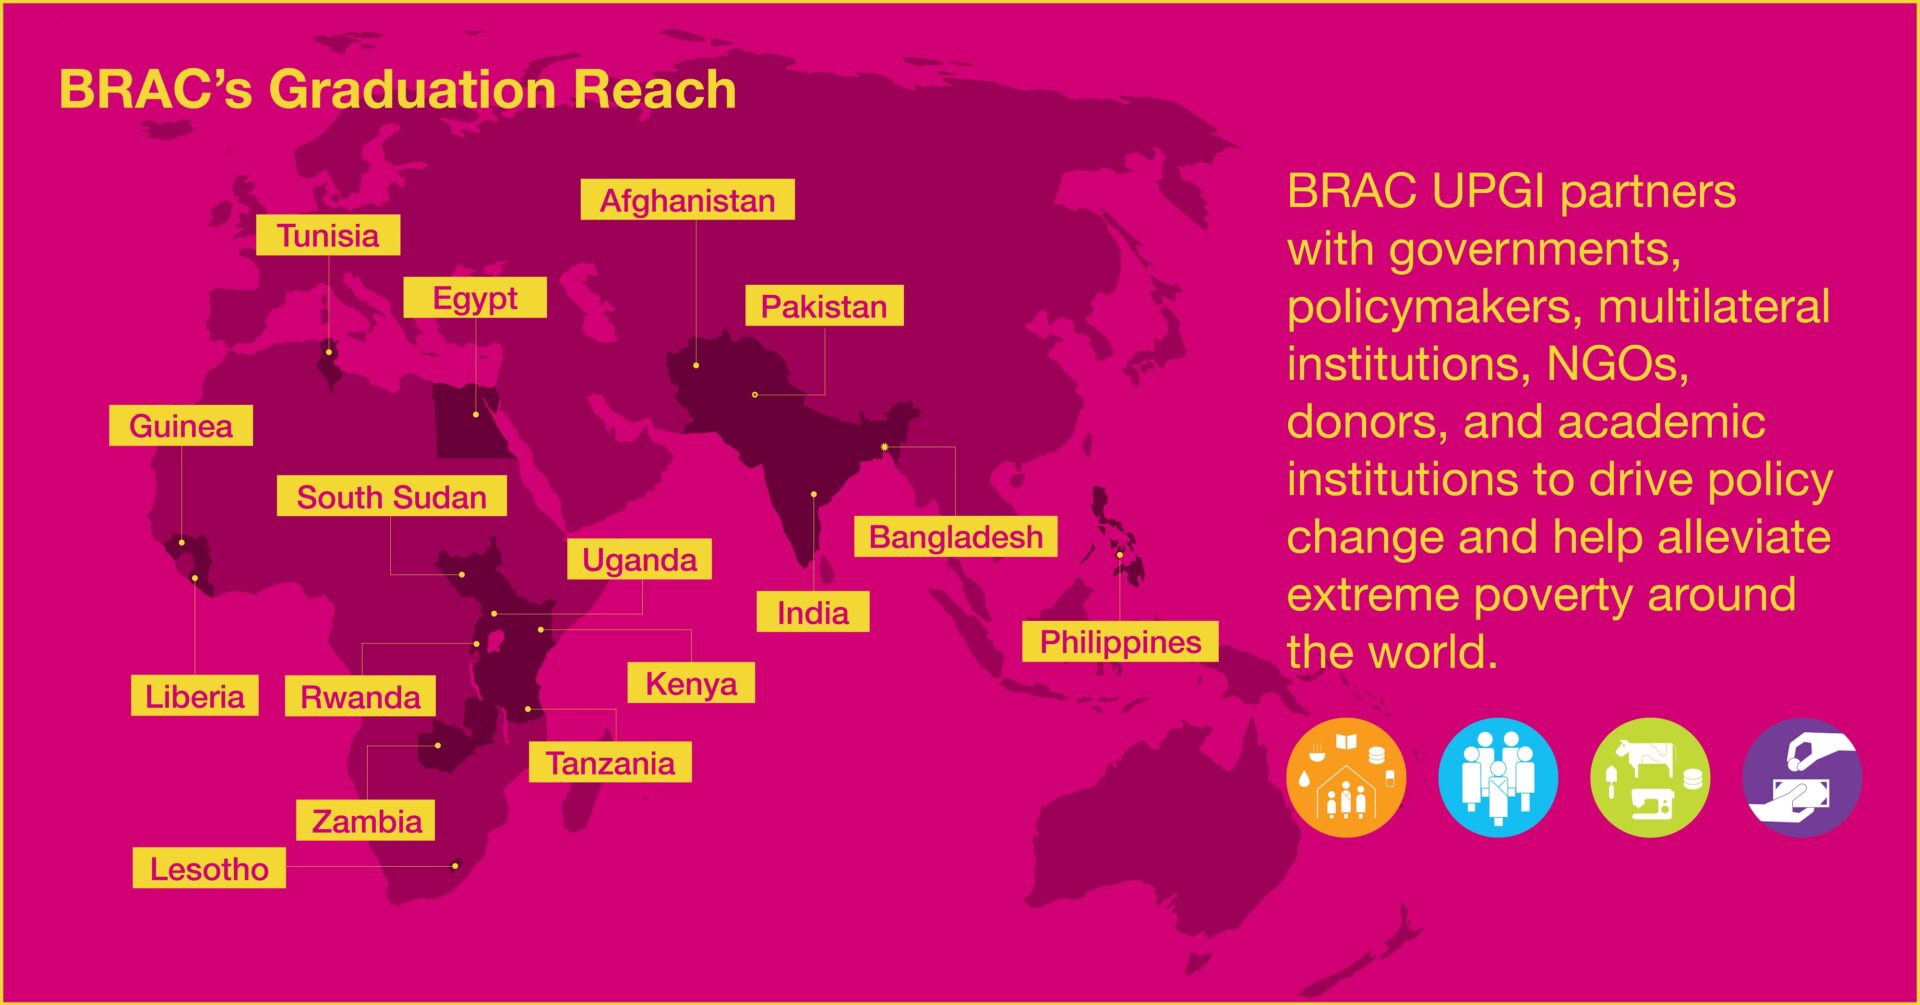 Global reach of BRAC Graduation approach